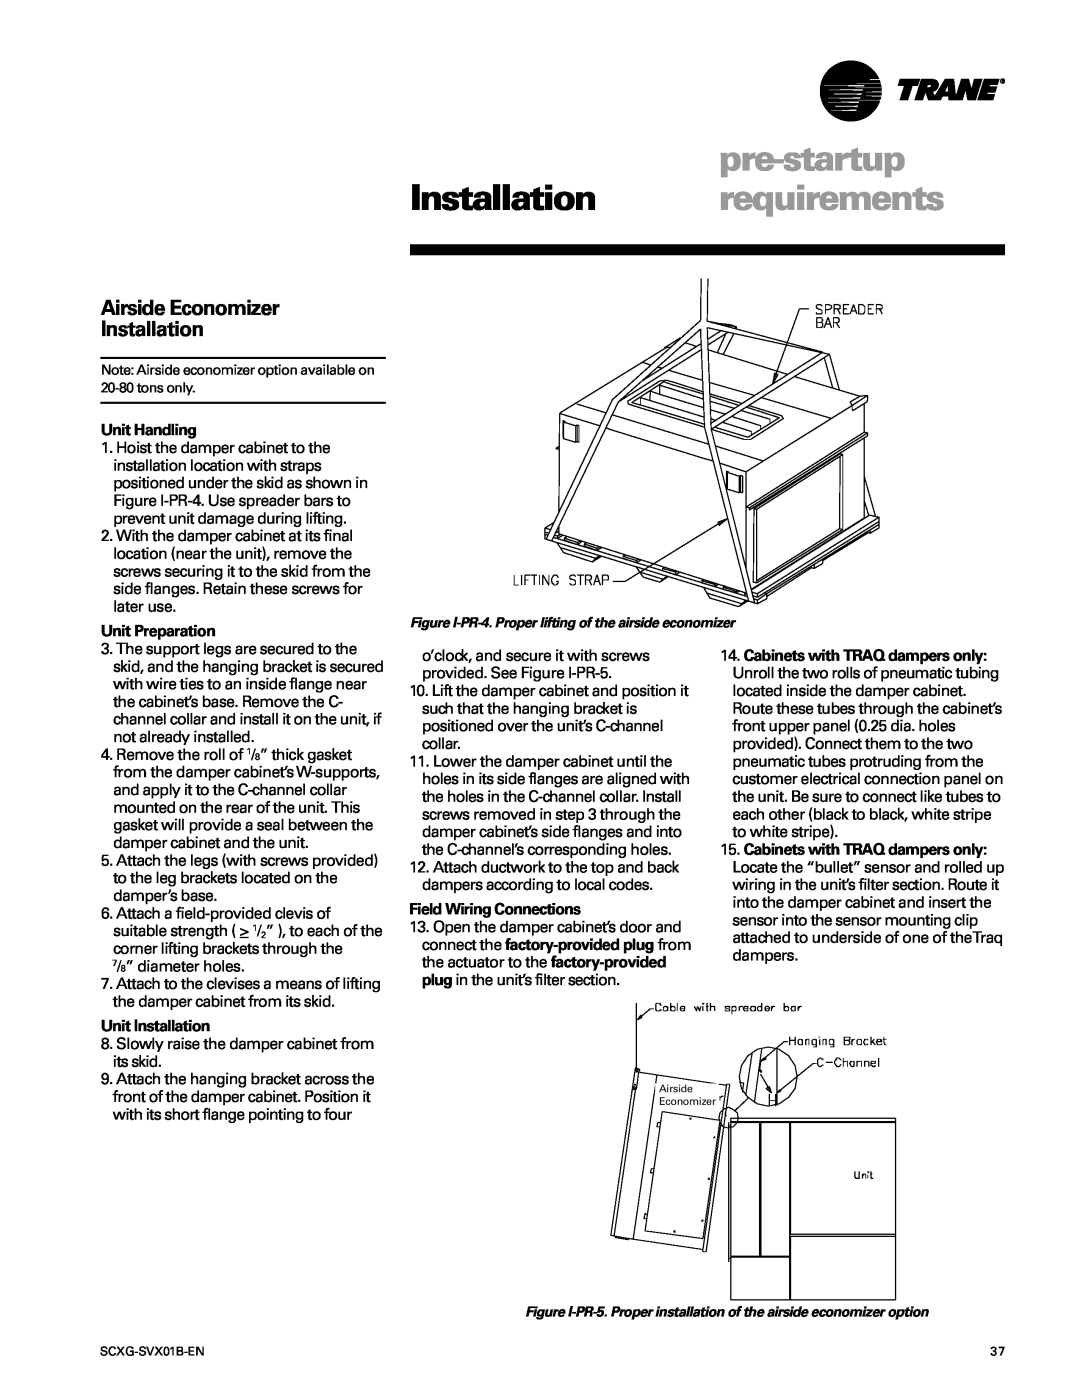 Trane SCXG-SVX01B-EN manual Airside Economizer Installation, pre-startup, Installation requirements, Unit Handling 